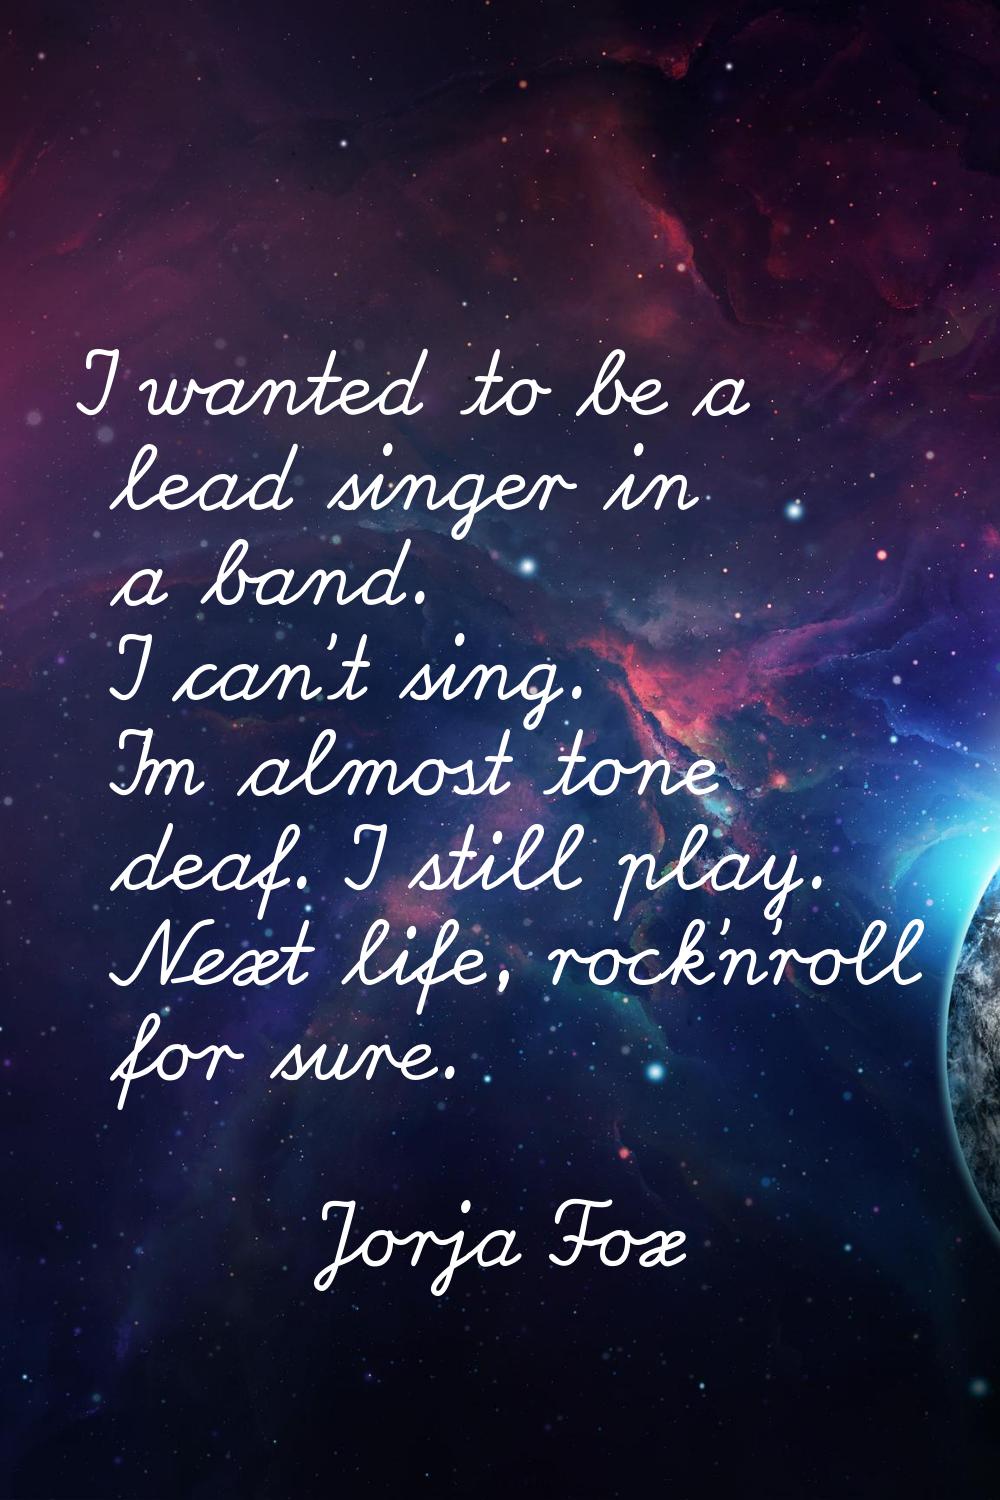 I wanted to be a lead singer in a band. I can't sing. I'm almost tone deaf. I still play. Next life